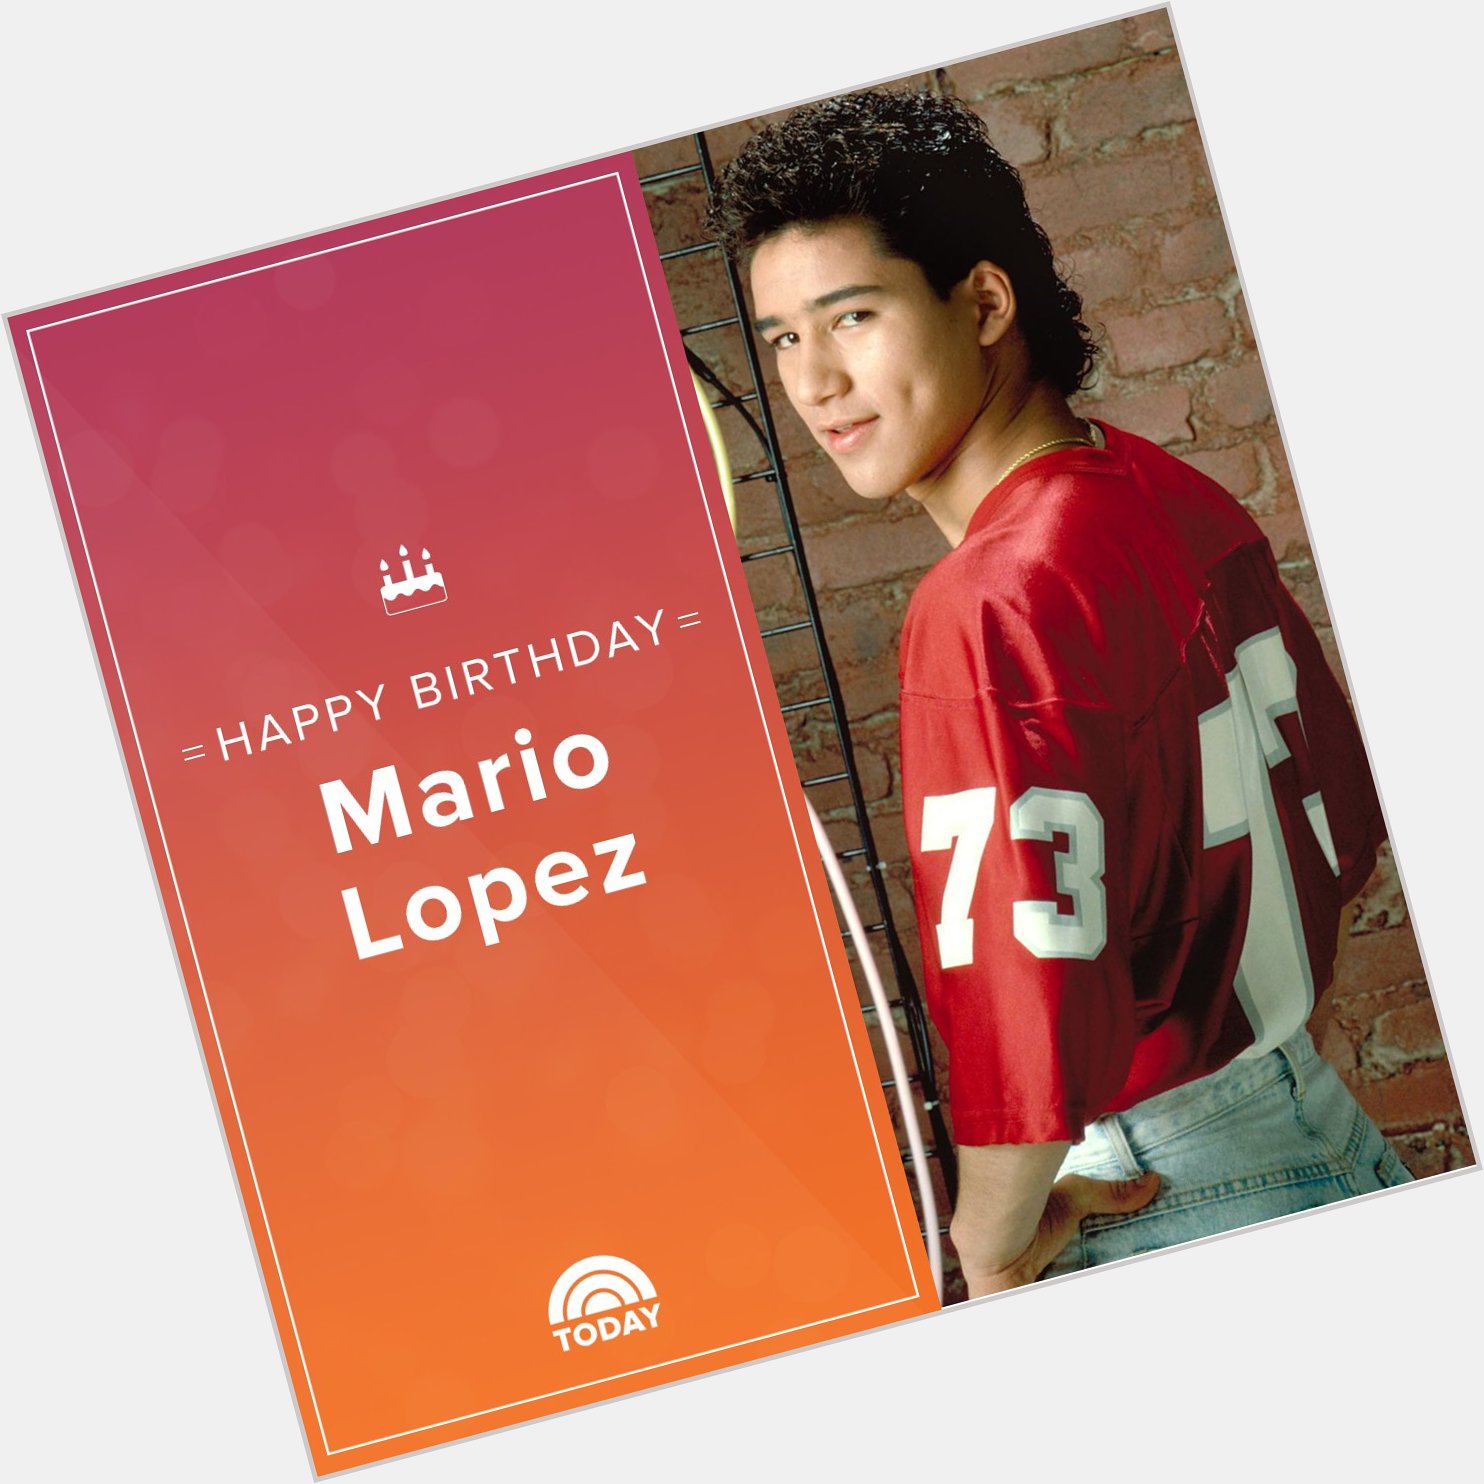 Happy 45th birthday, Mario Lopez! 